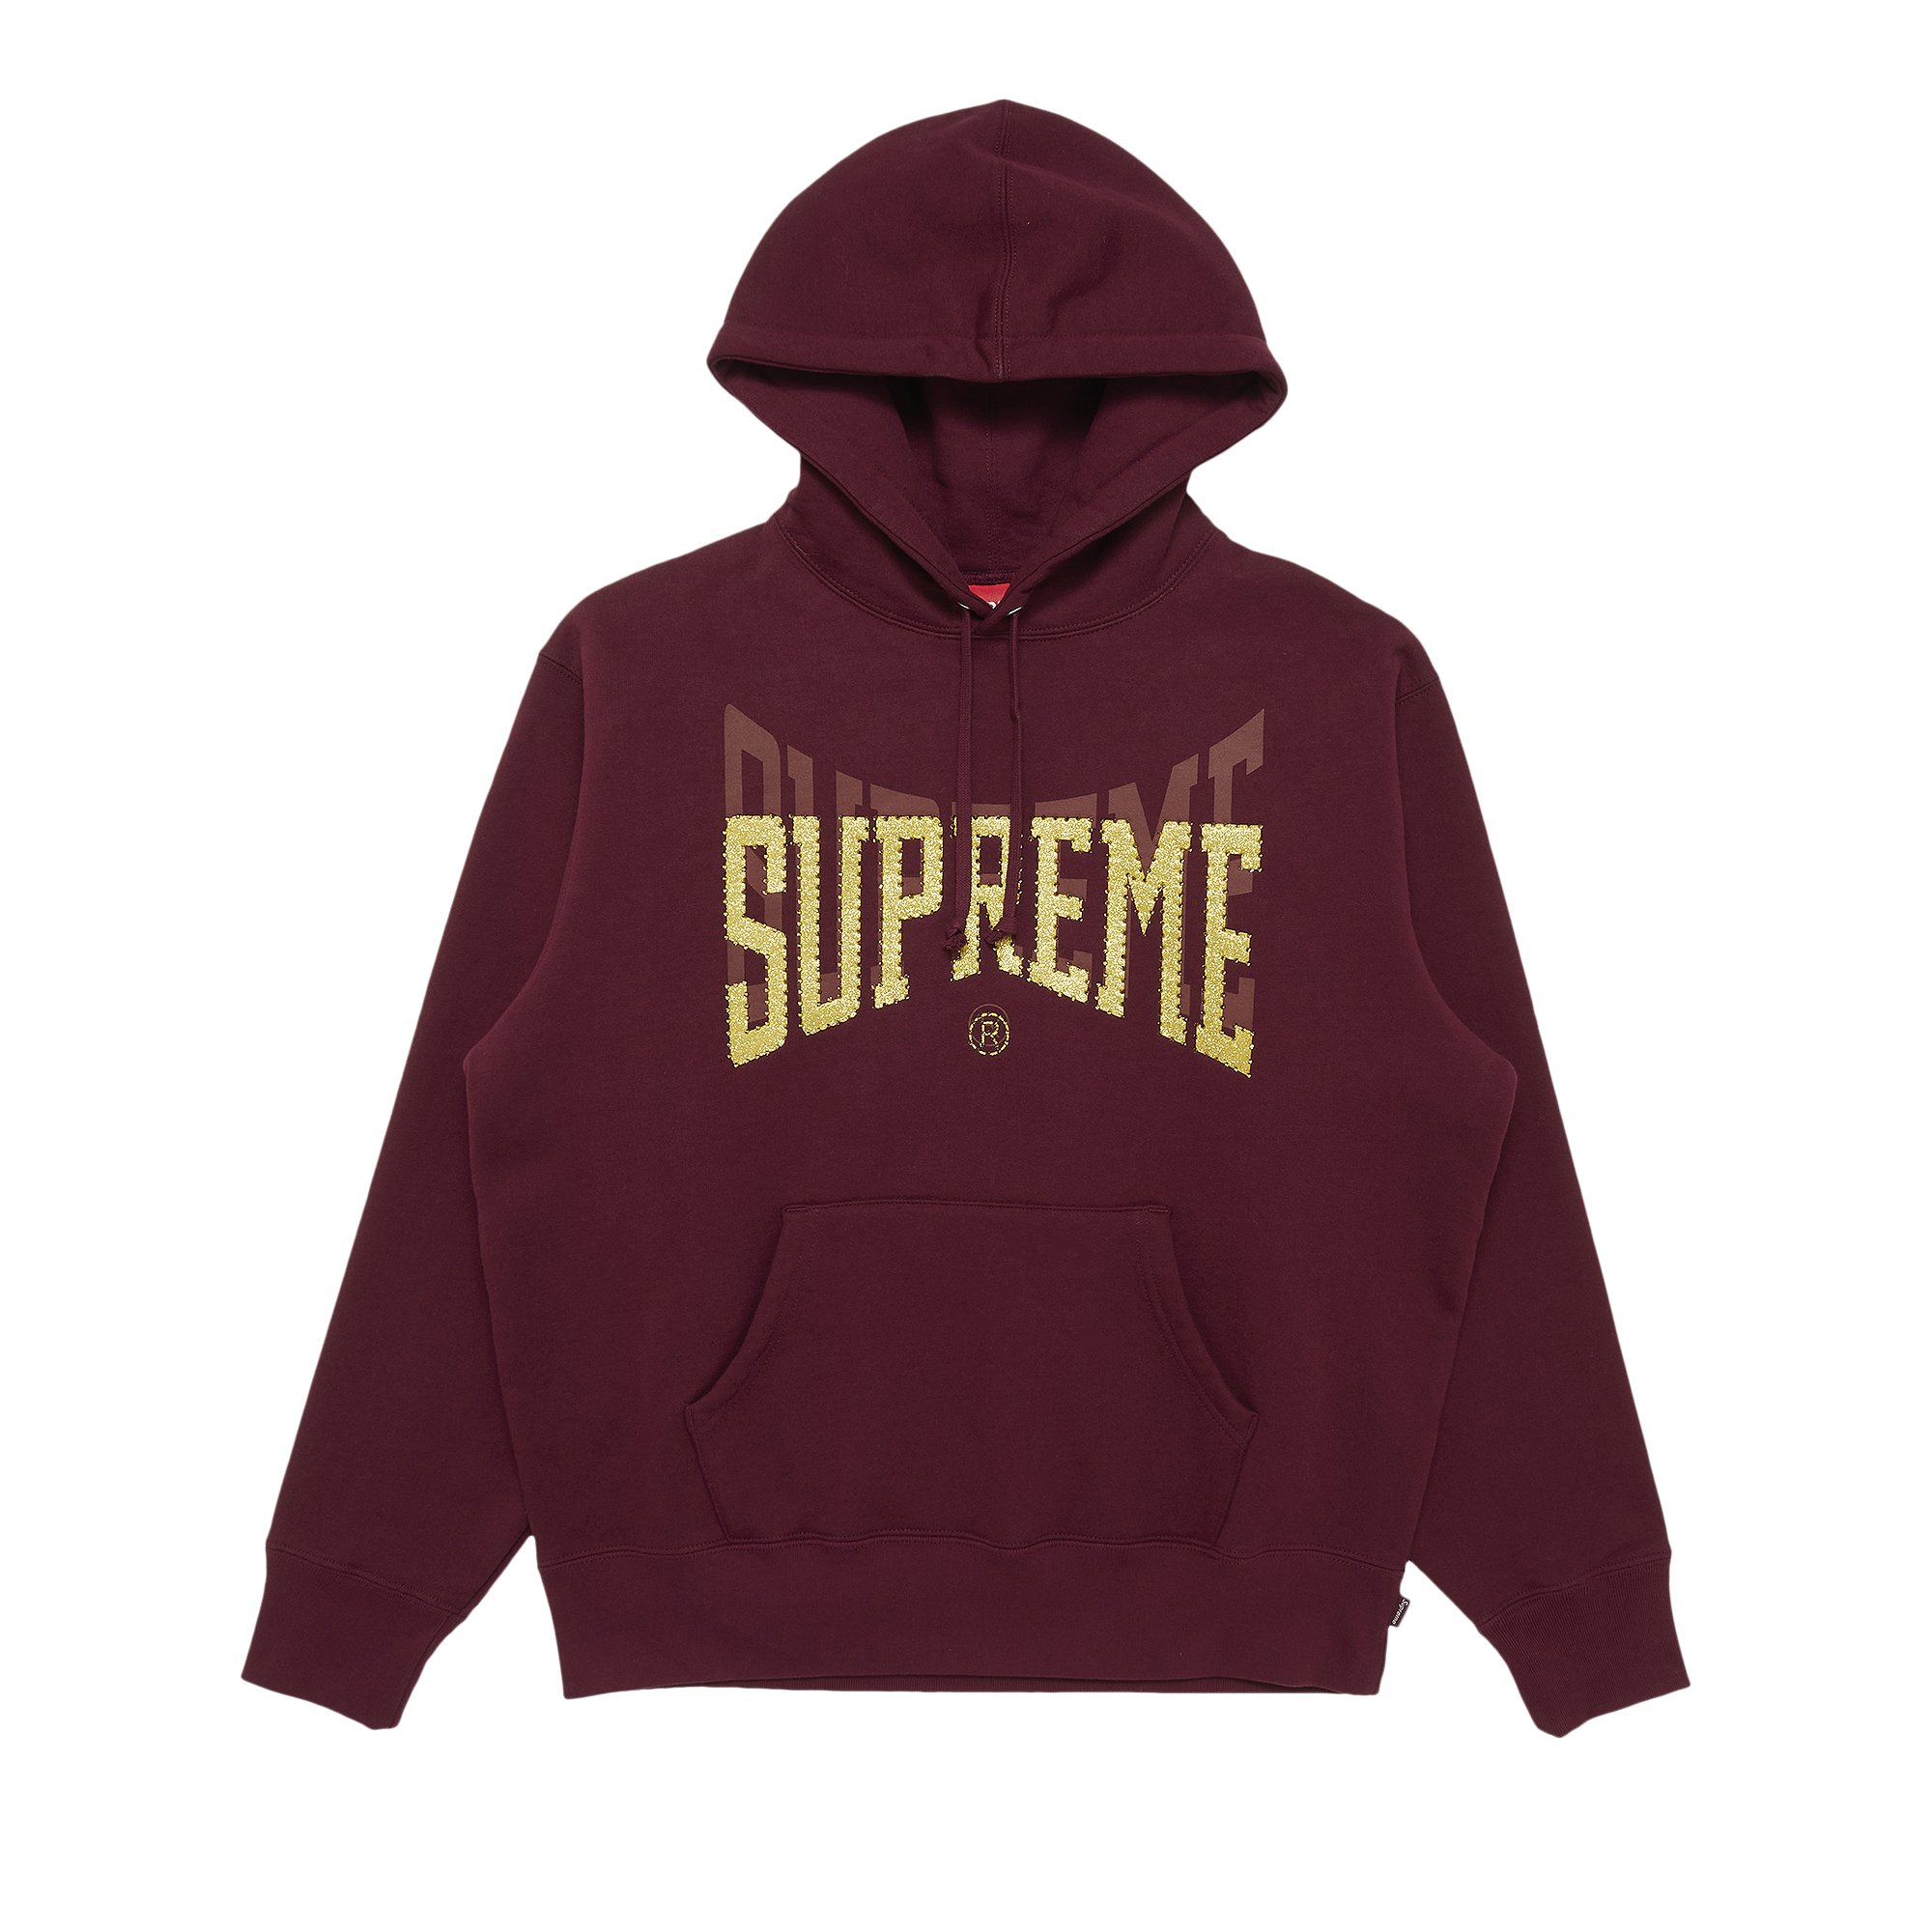 Buy Supreme Rhinestone Shadow Hooded Sweatshirt 'Burgundy